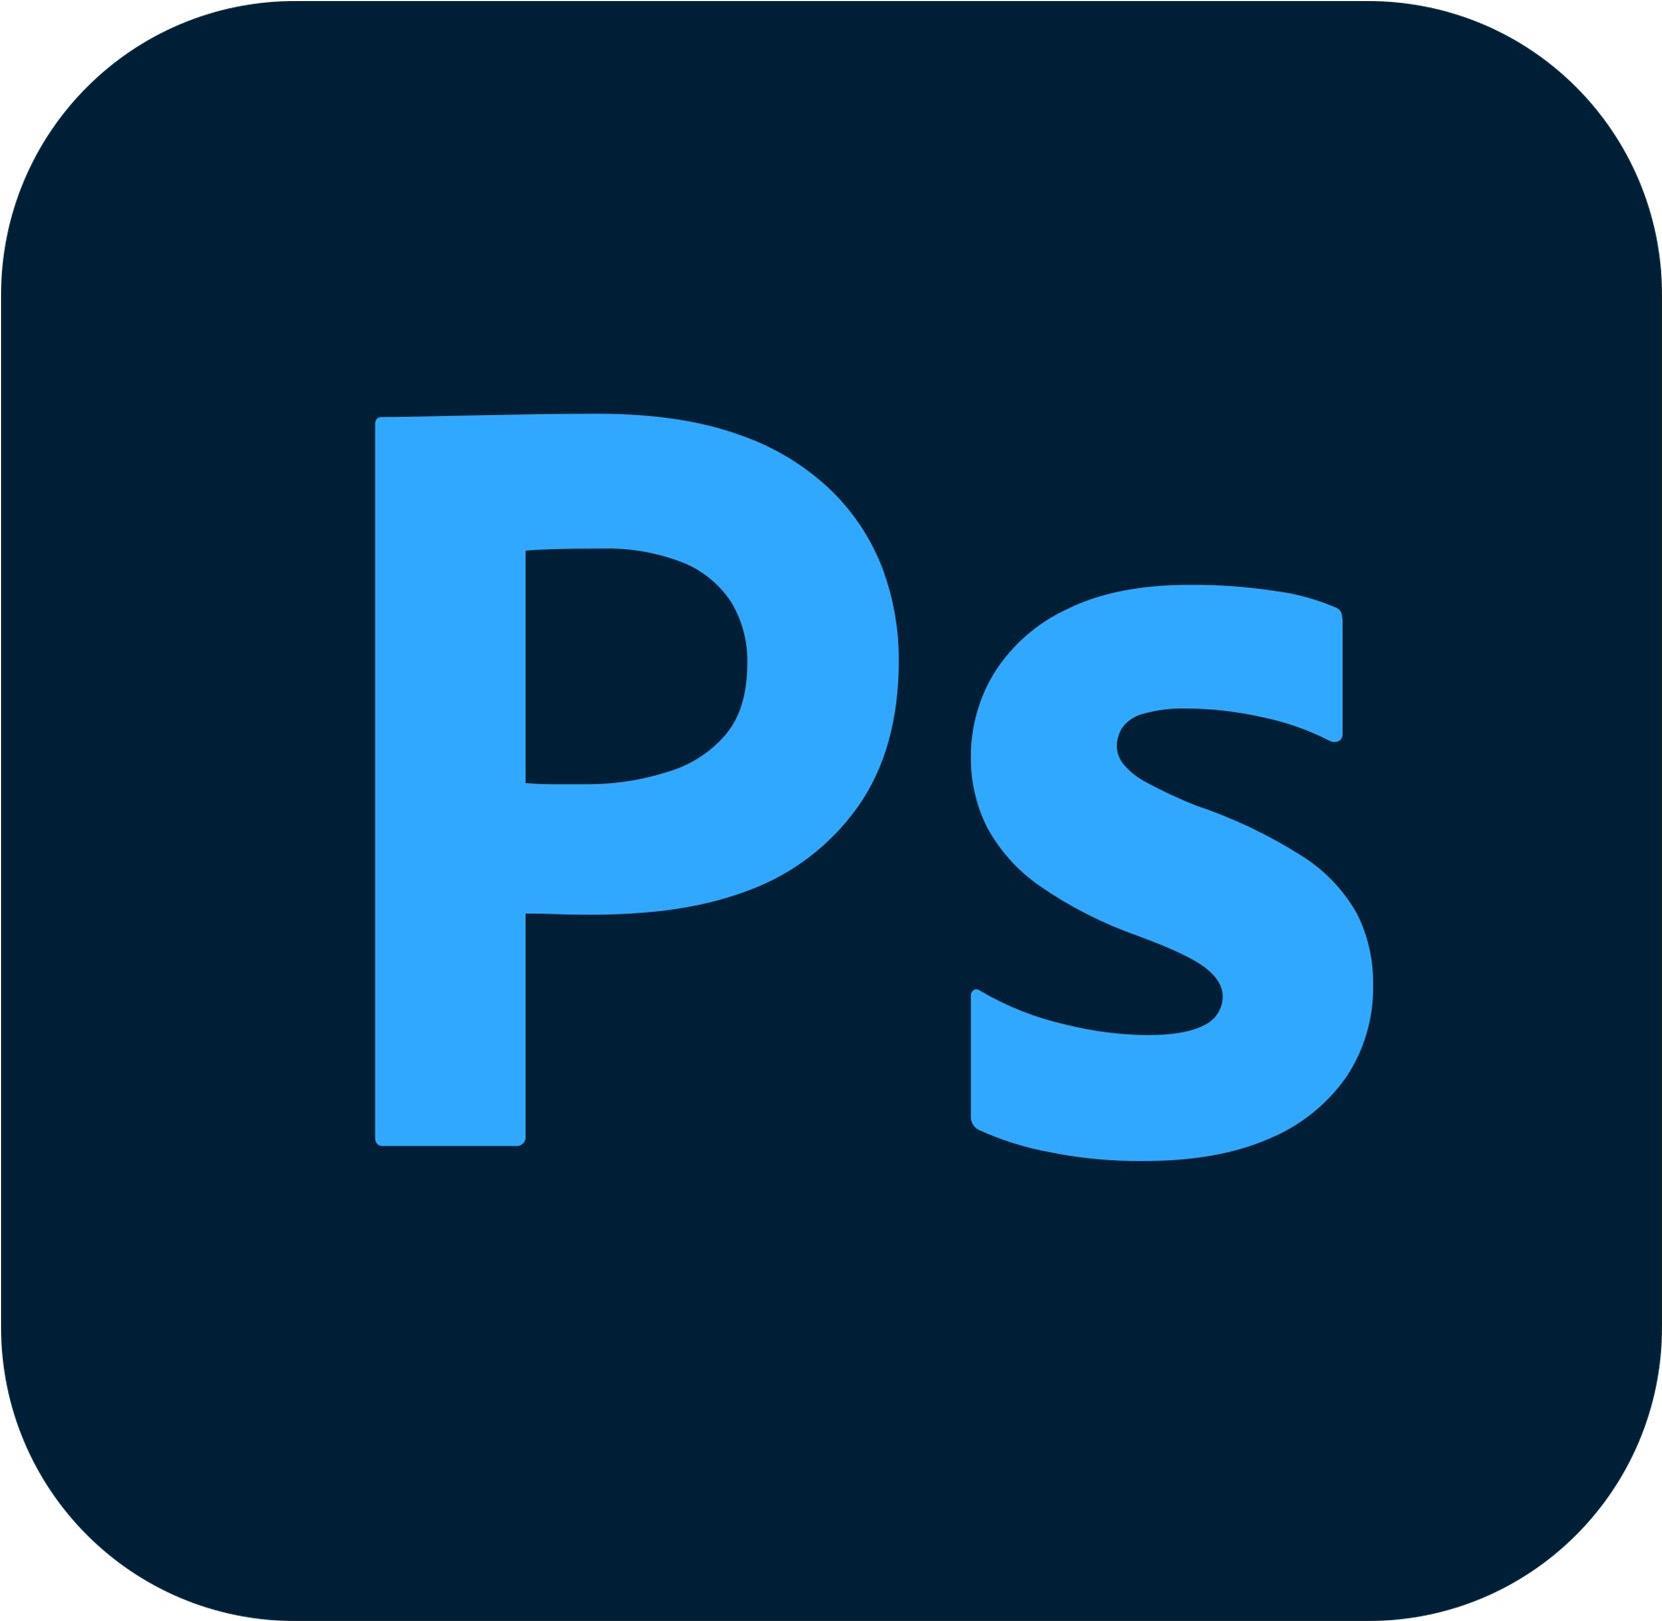 Adobe Photoshop Pro for teams - Abonnement neu - 1 Benutzer - VIP Select - Stufe 14 (100+) - 3 years commitment, Introductory Full Year Forecast - Win, Mac - EU English von Adobe